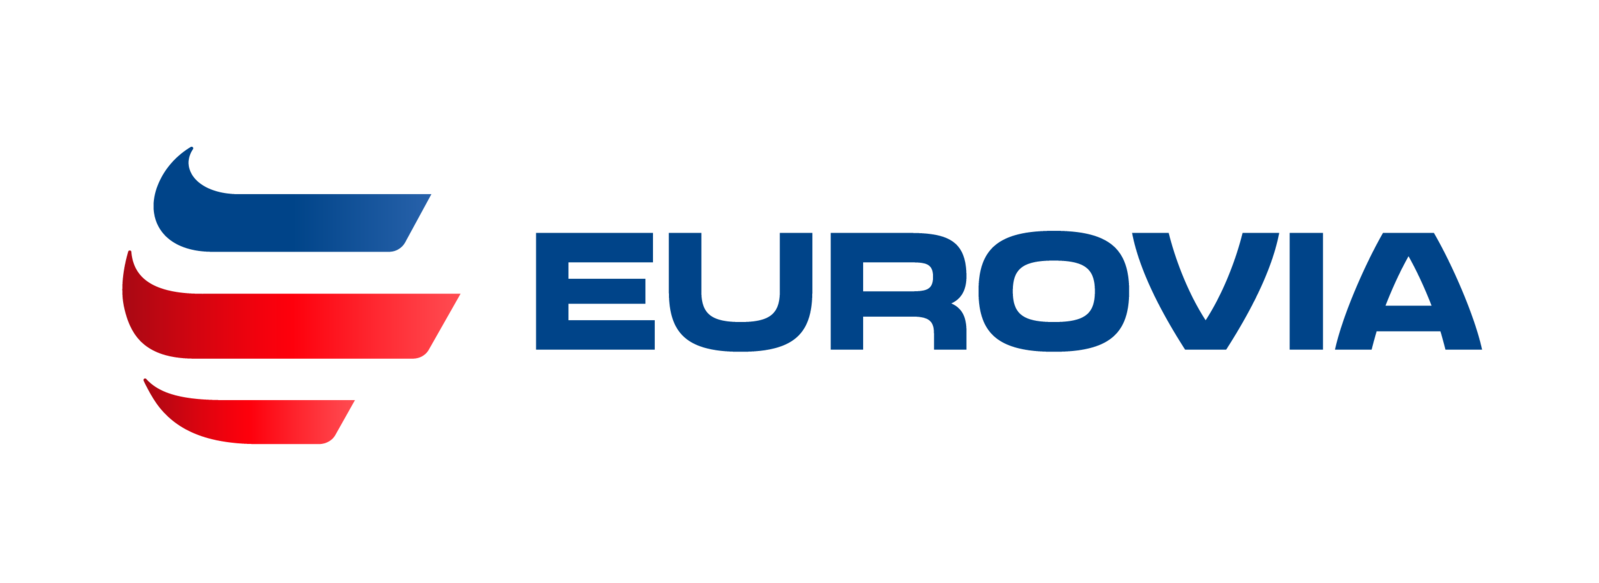 Eurovia_Logotype_Digital_Couleurs.png